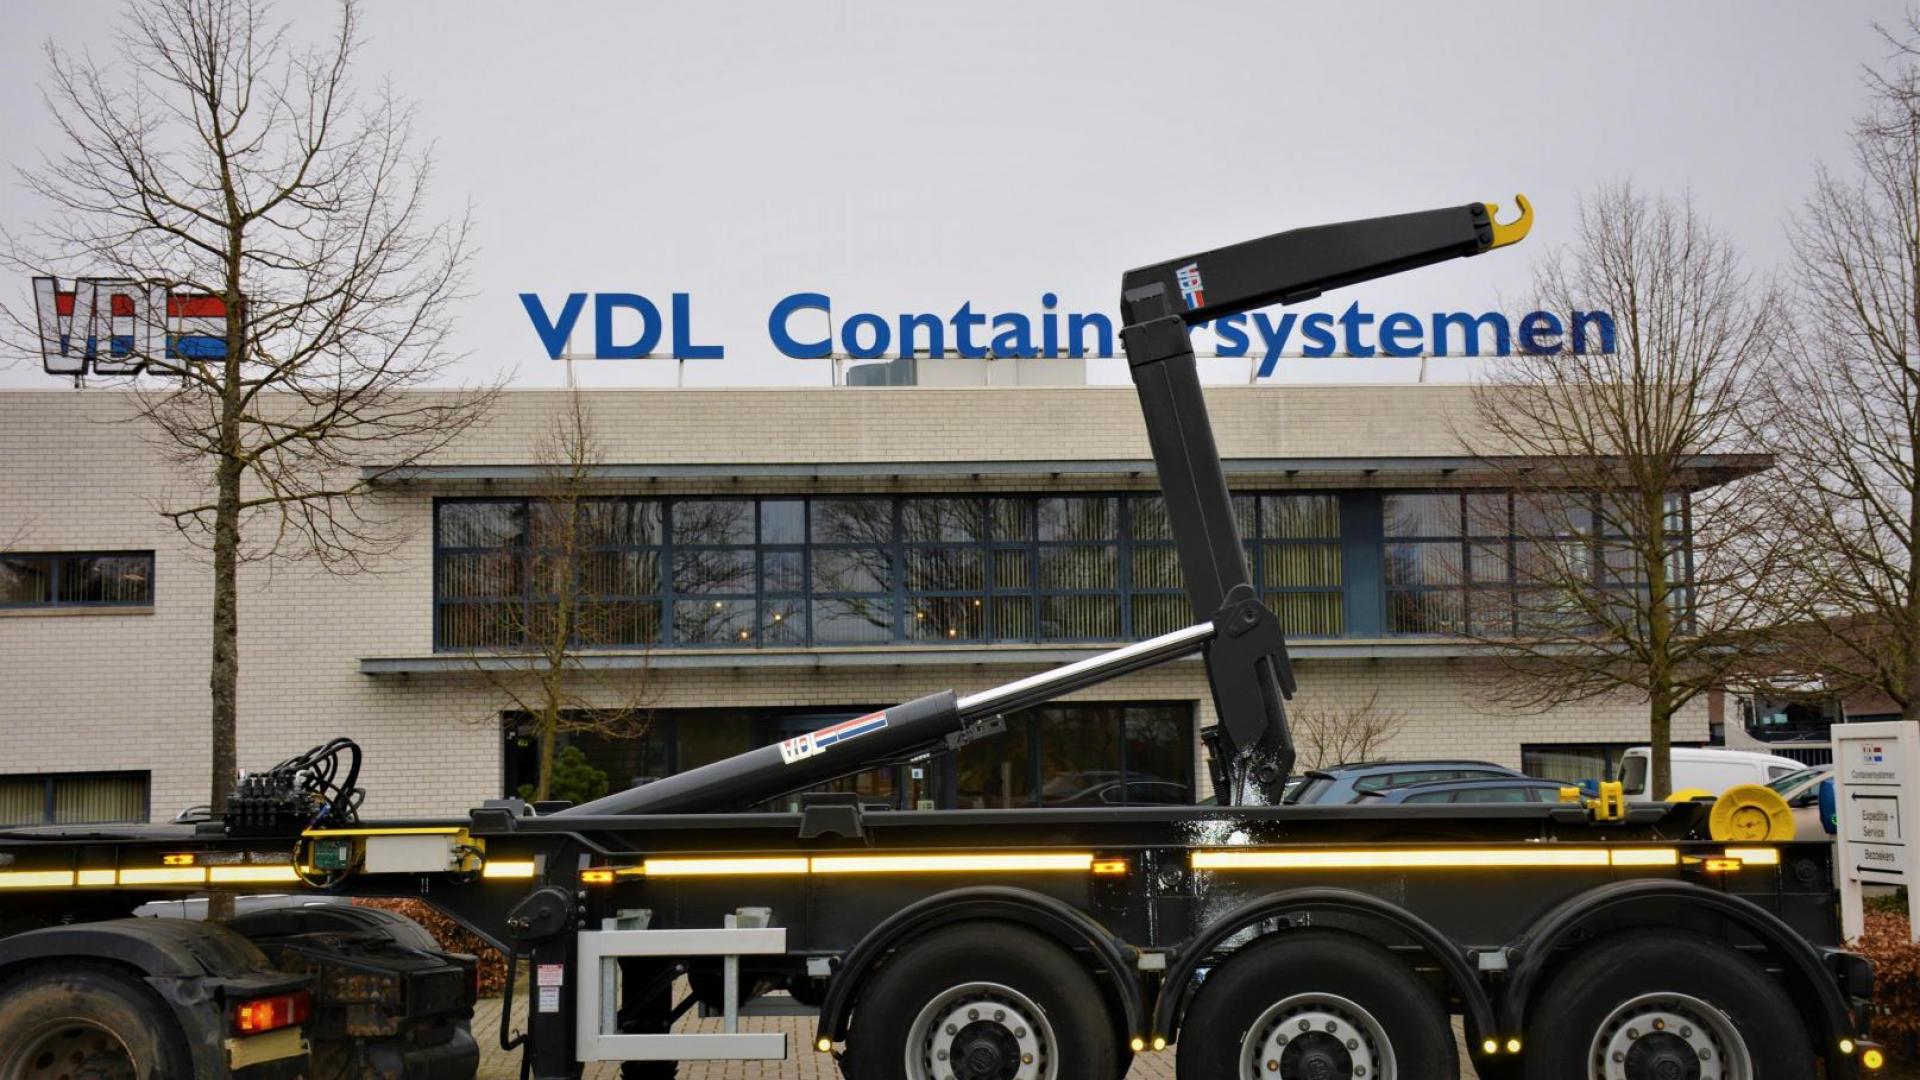 New VDL hooklift trailer option for the UK market